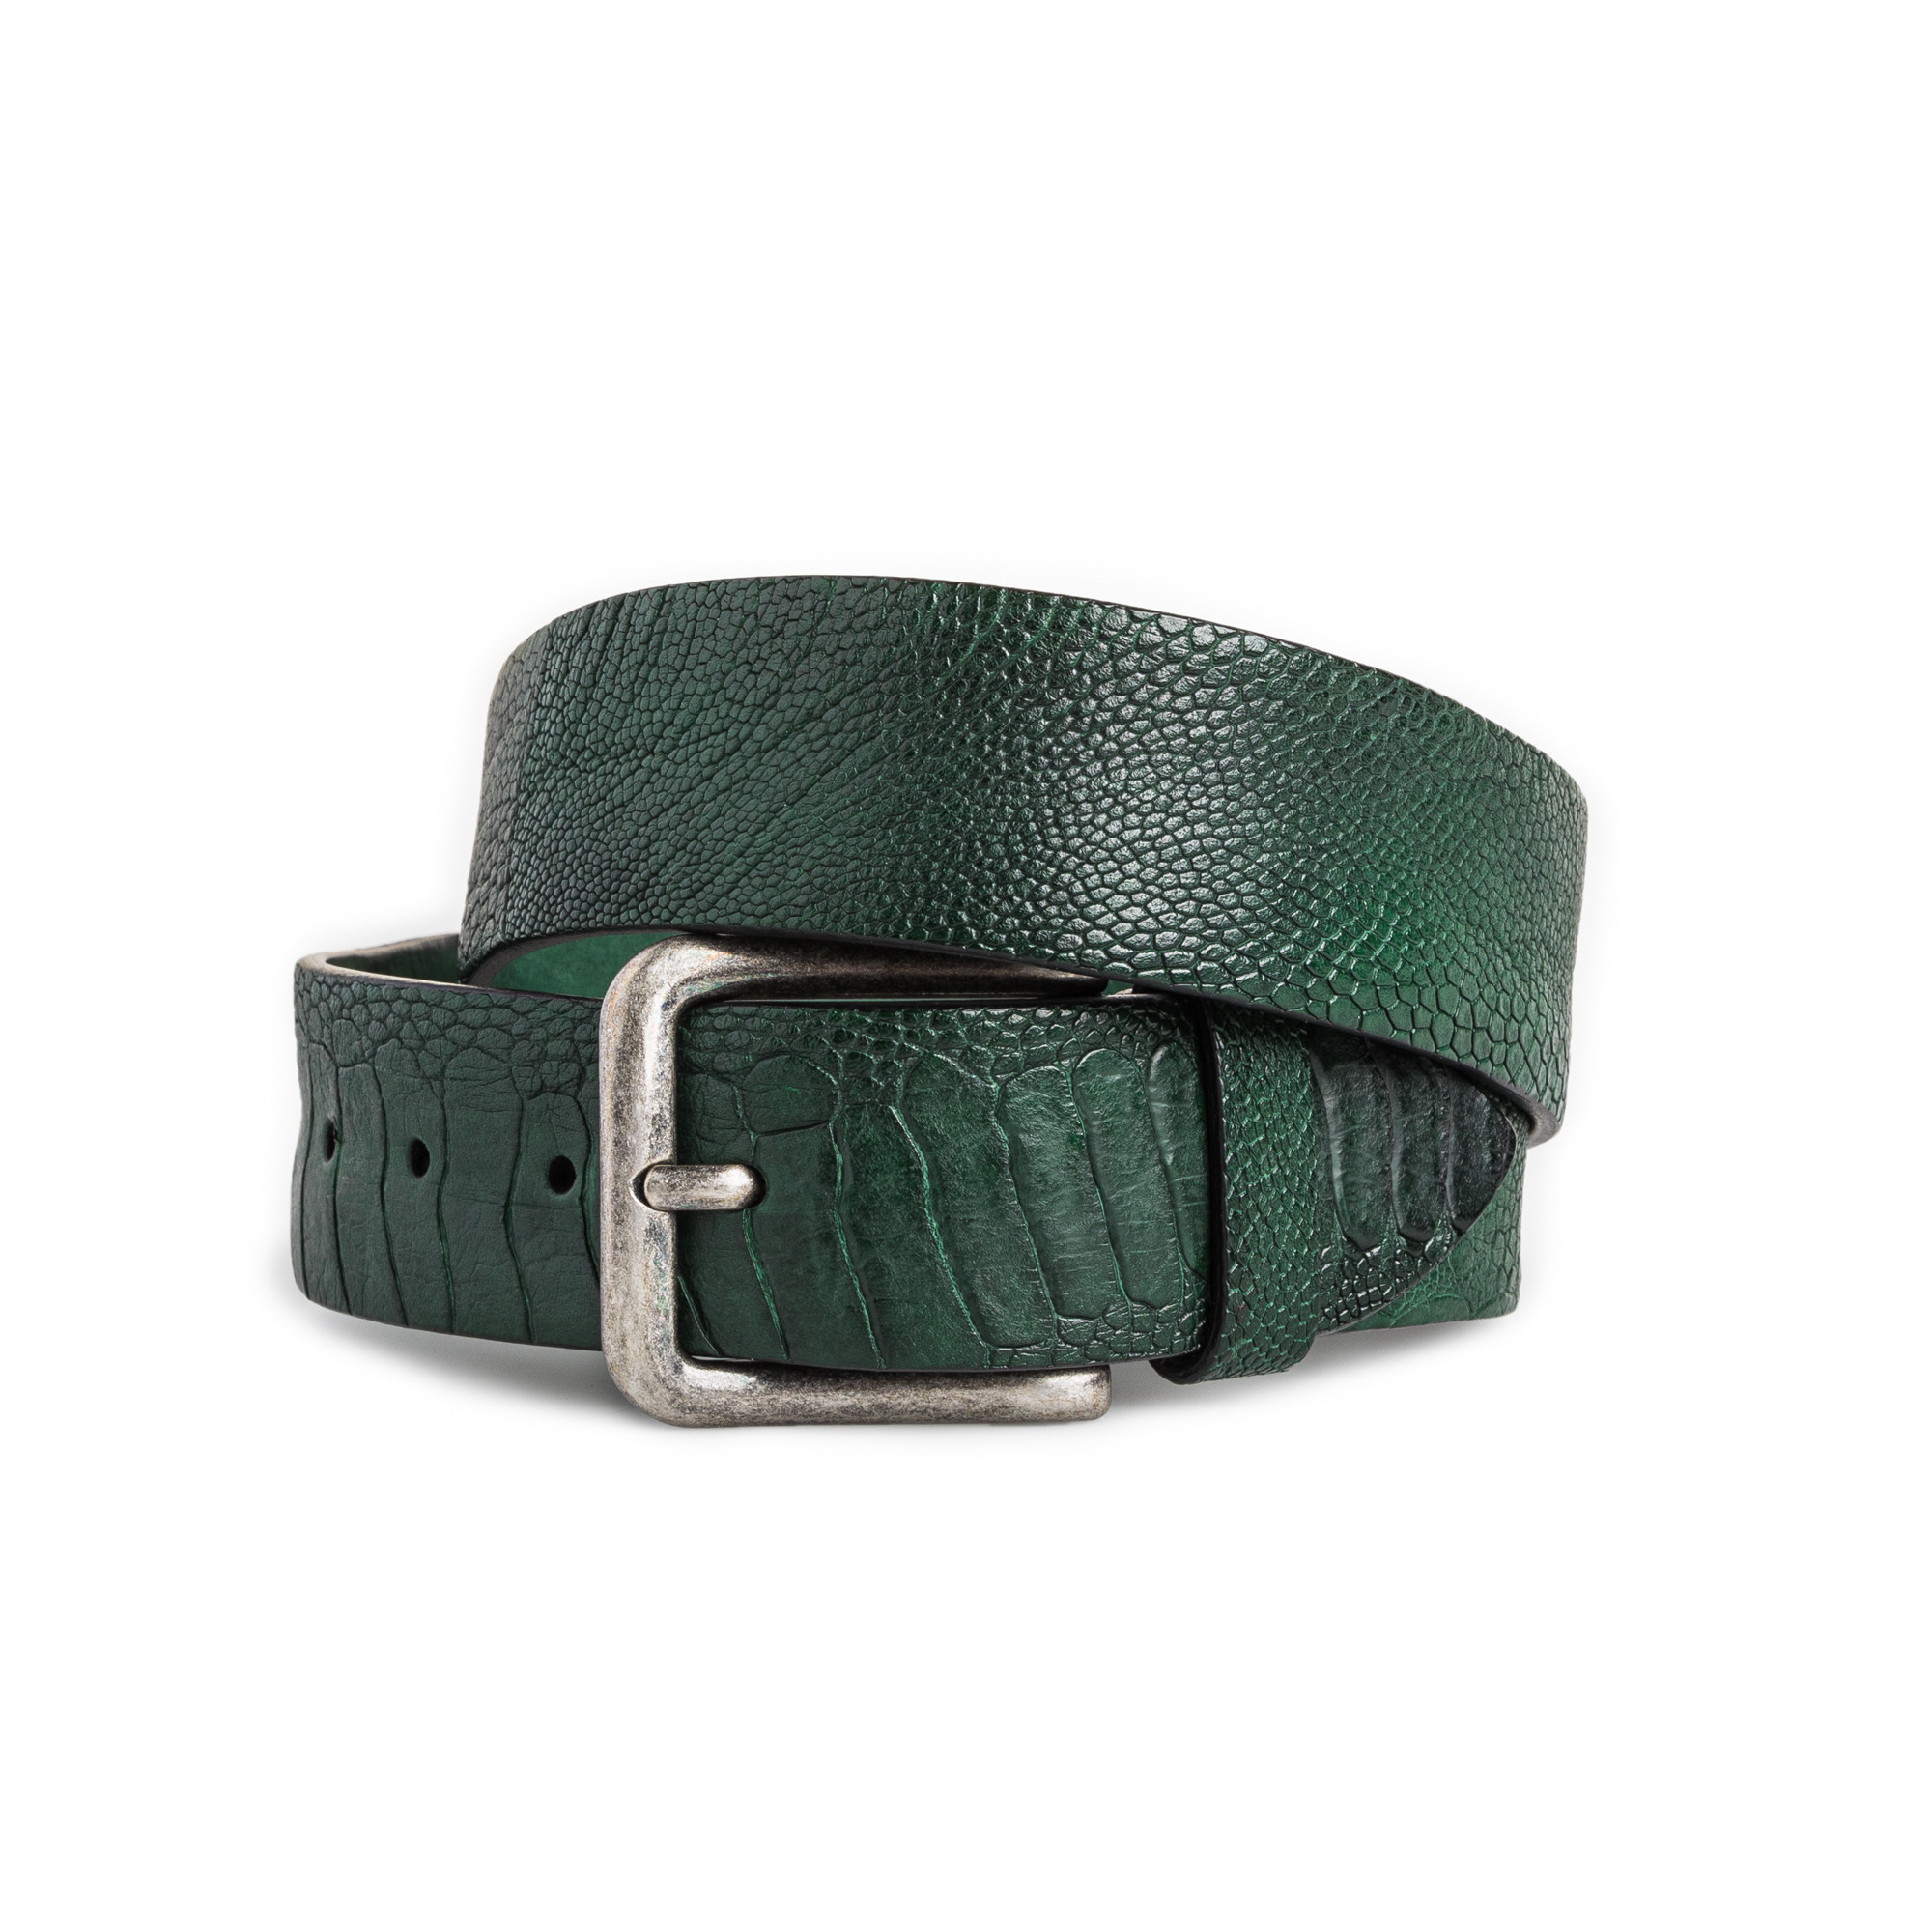 Post & Co. - Men's Ostrich Leg Leather Belt - Green